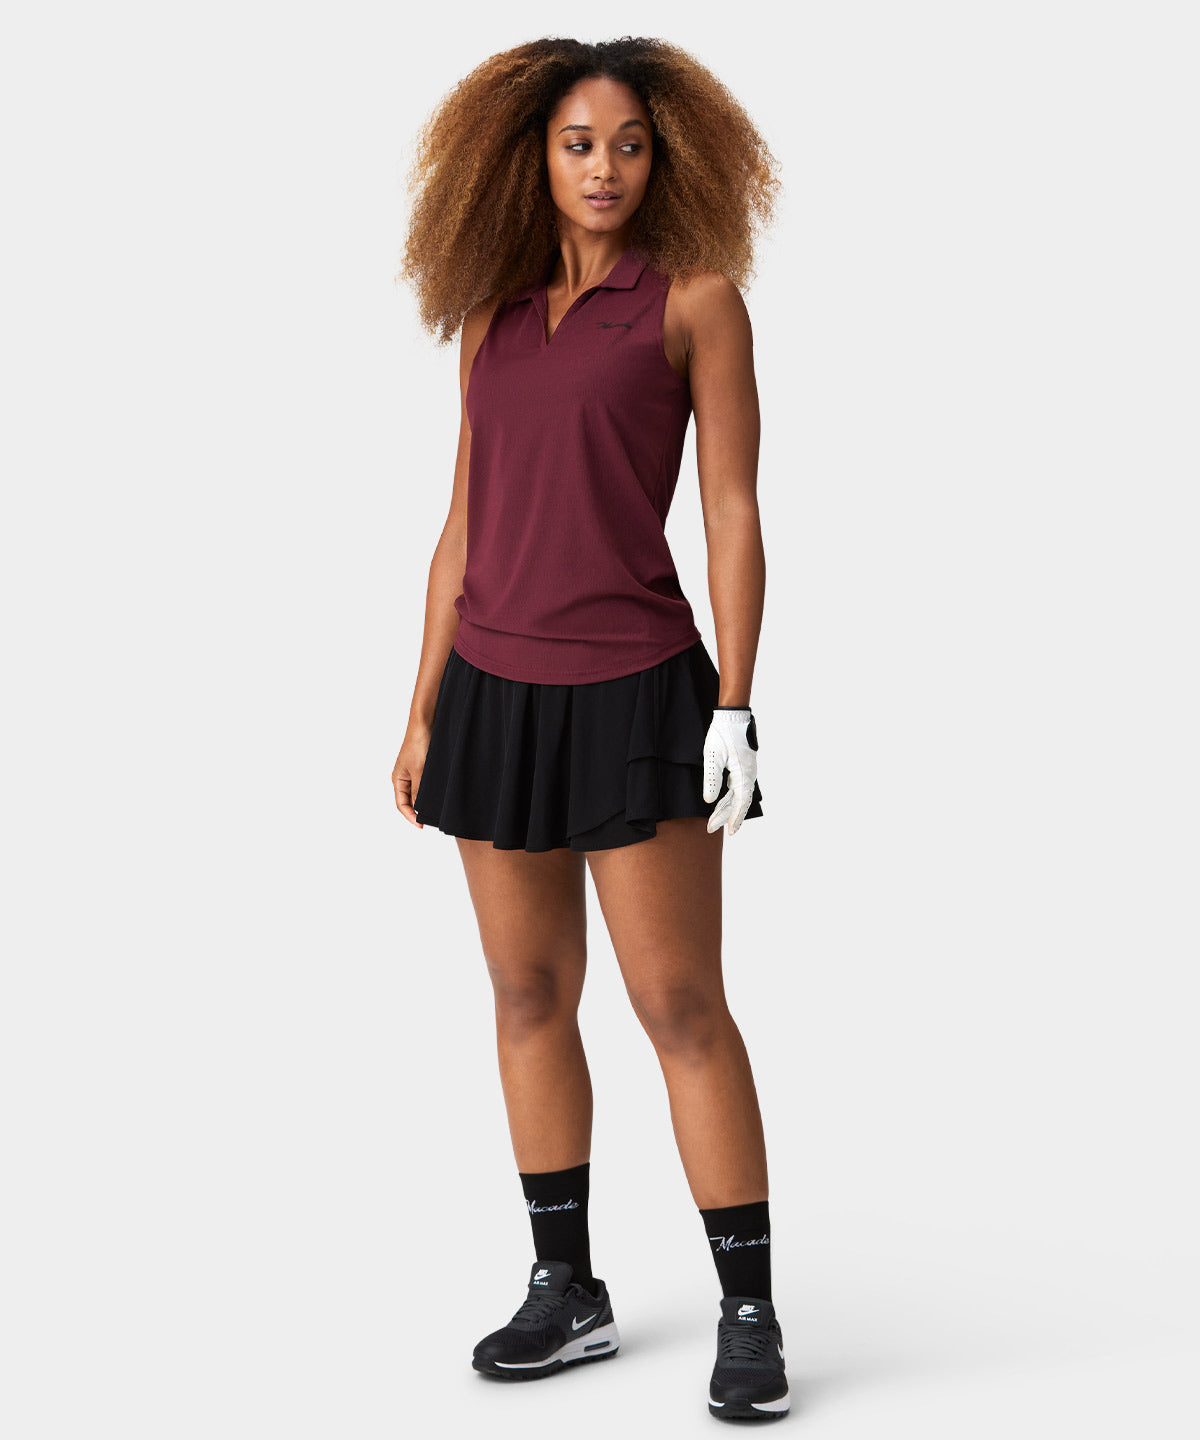 Cleo Black Tour Skirt Macade Golf